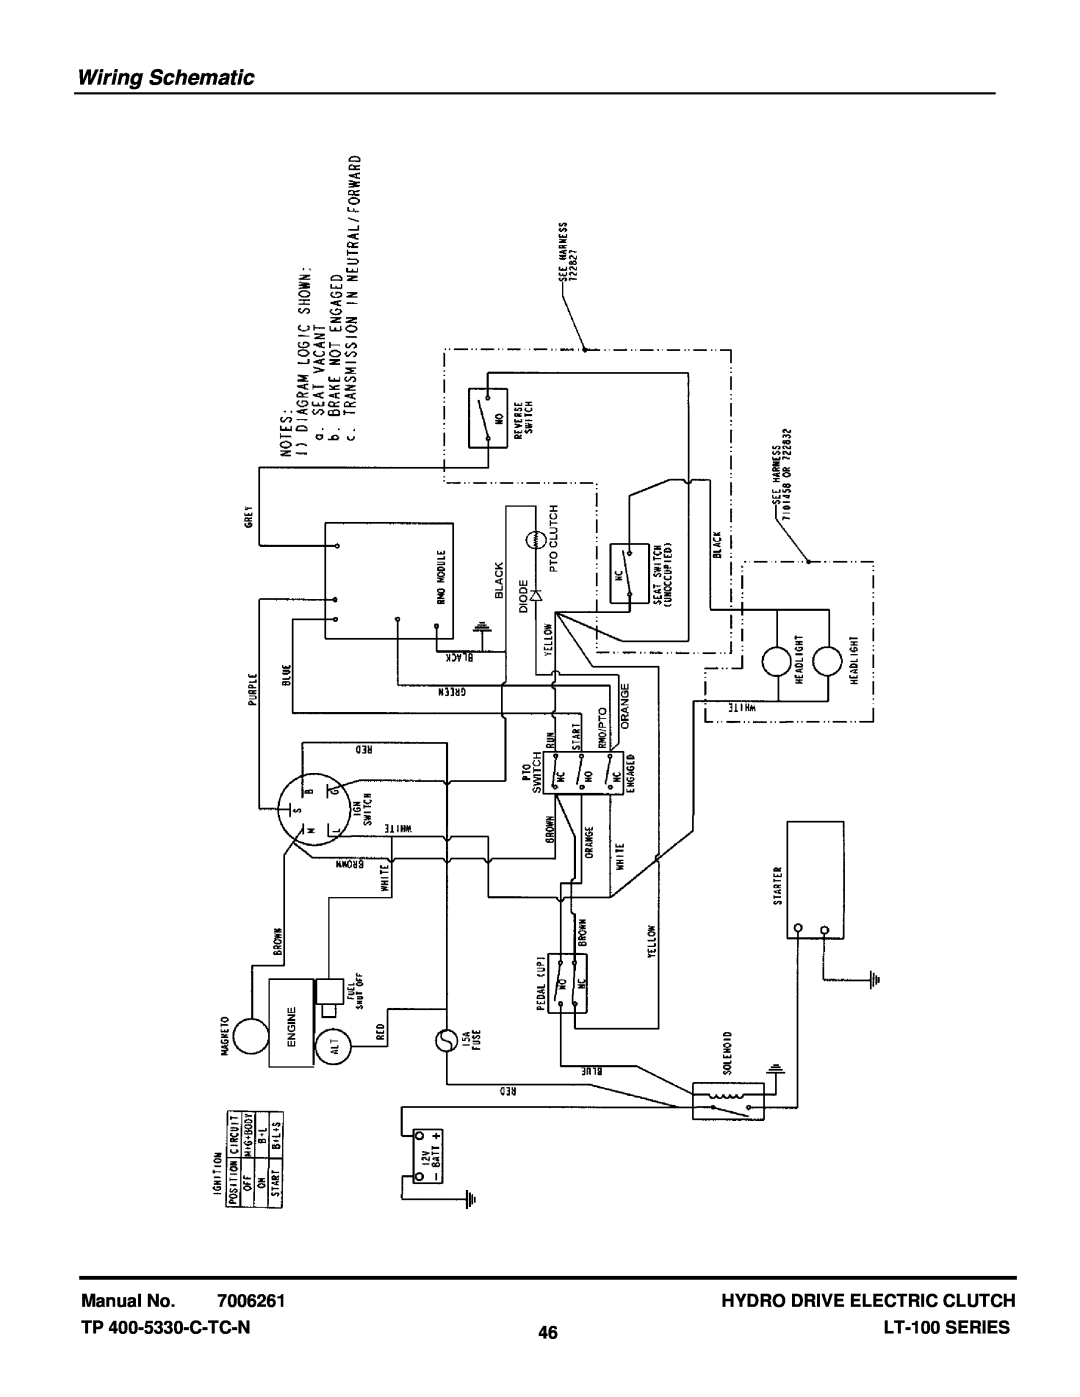 Snapper LT-100 Series Wiring Schematic, Manual No, 7006261, Hydro Drive Electric Clutch, TP 400-5330-C-TC-N, LT-100SERIES 